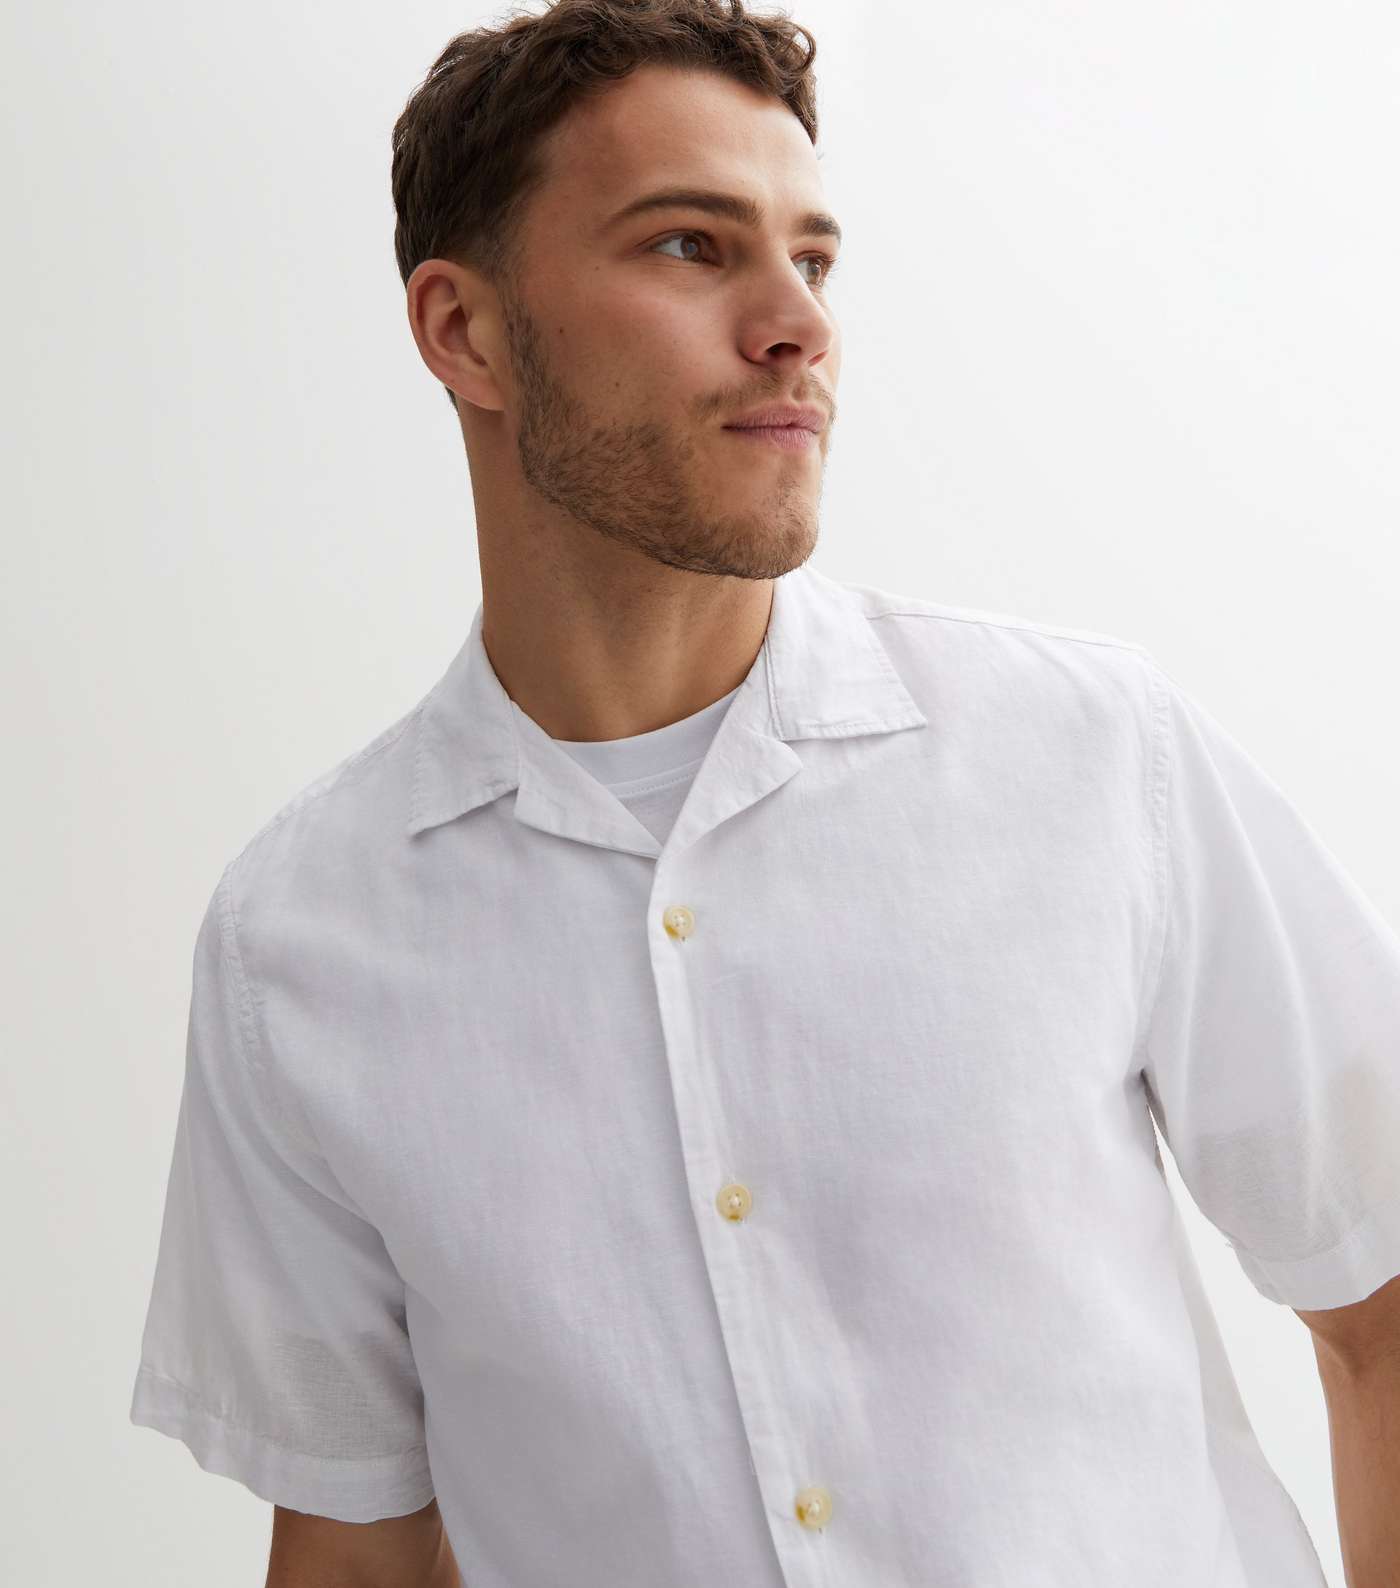 Jack & Jones White Linen-Look Short Sleeve Shirt Image 3